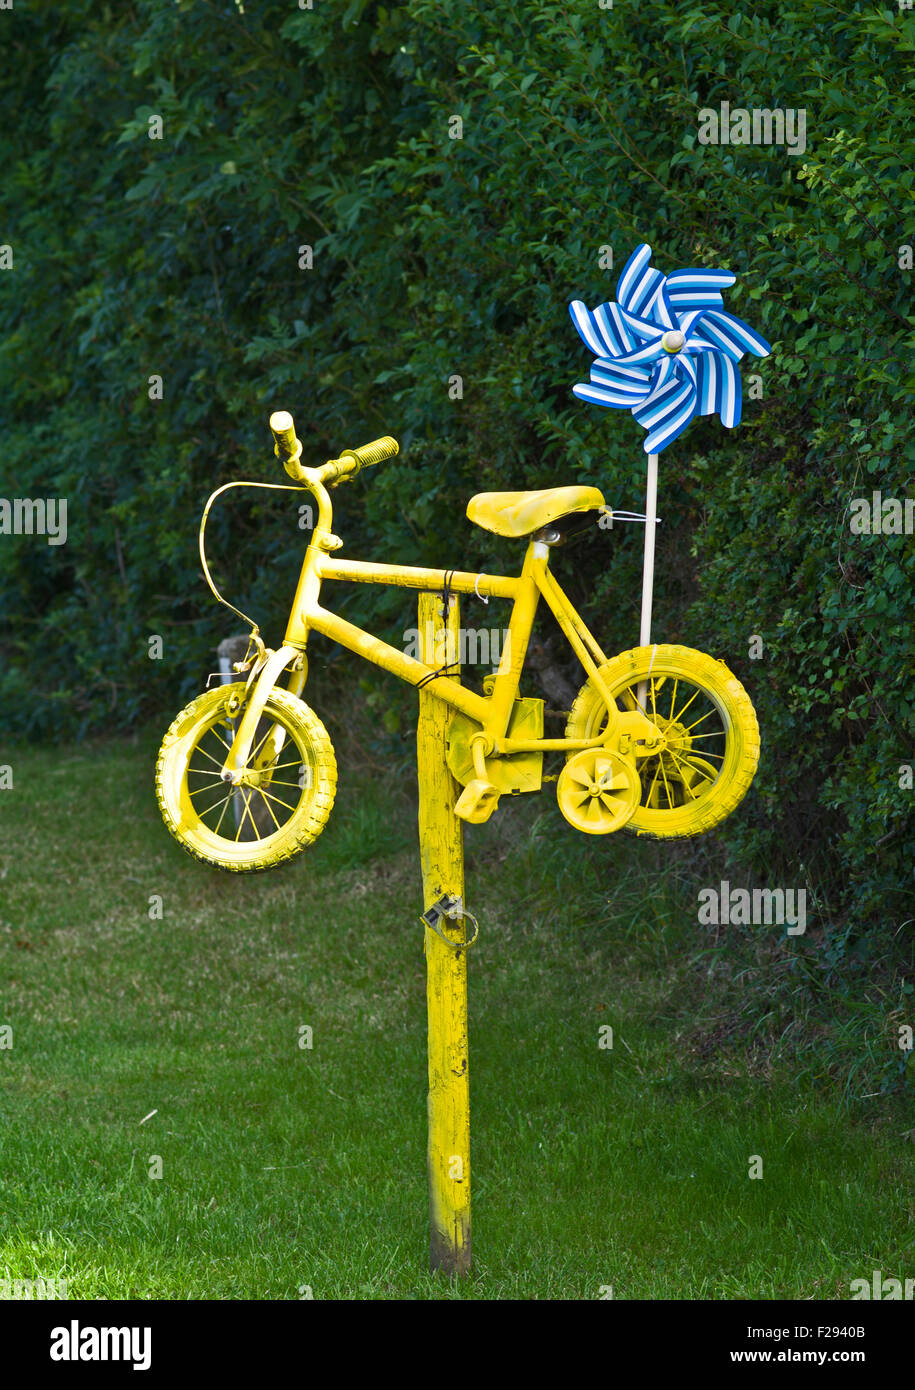 Bicicleta amarilla decorada fotografías e imágenes de alta resolución -  Alamy